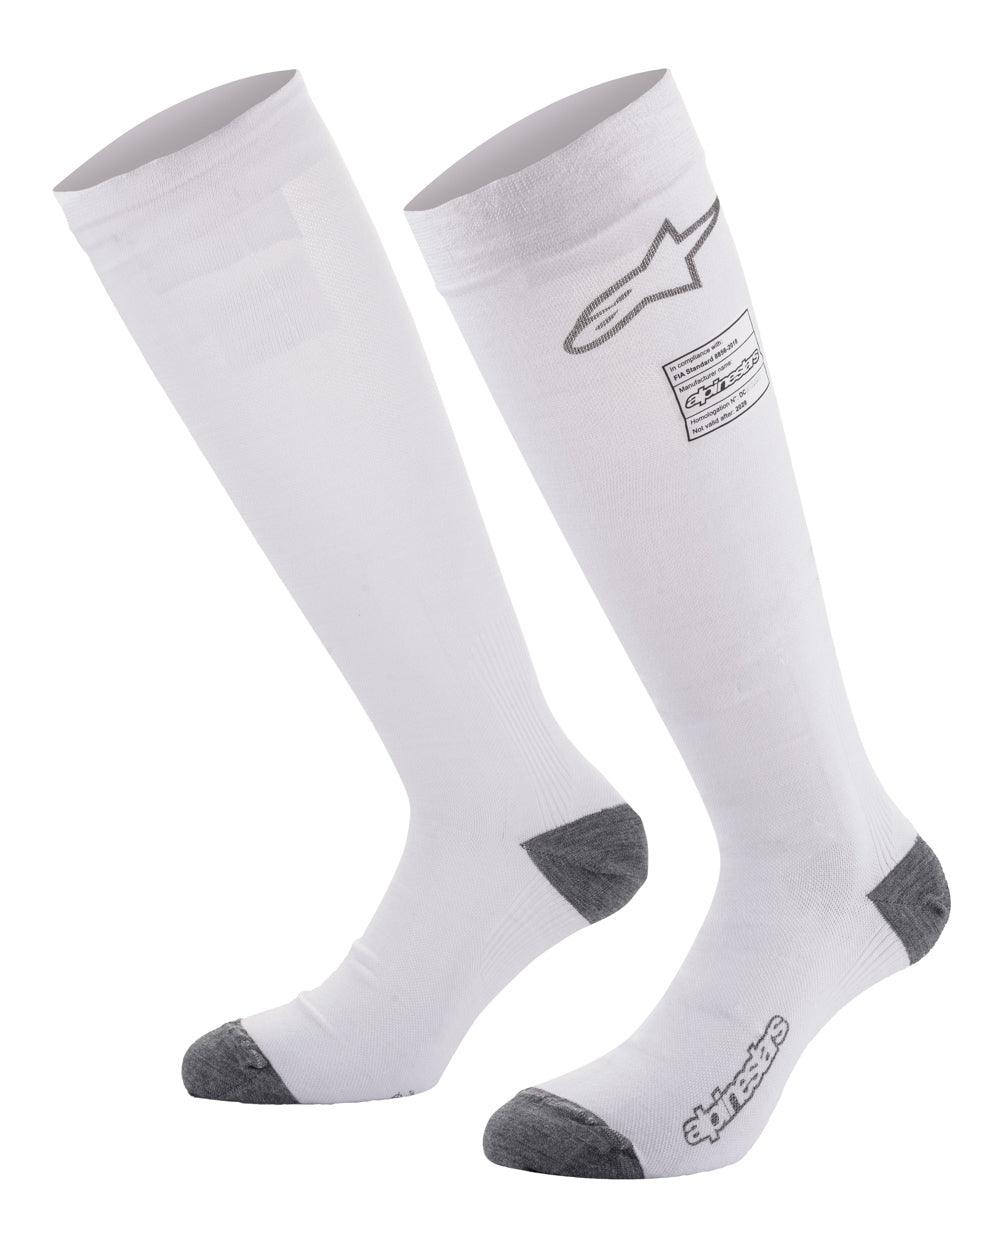 Socks ZX Evo V3 White Small - Burlile Performance Products